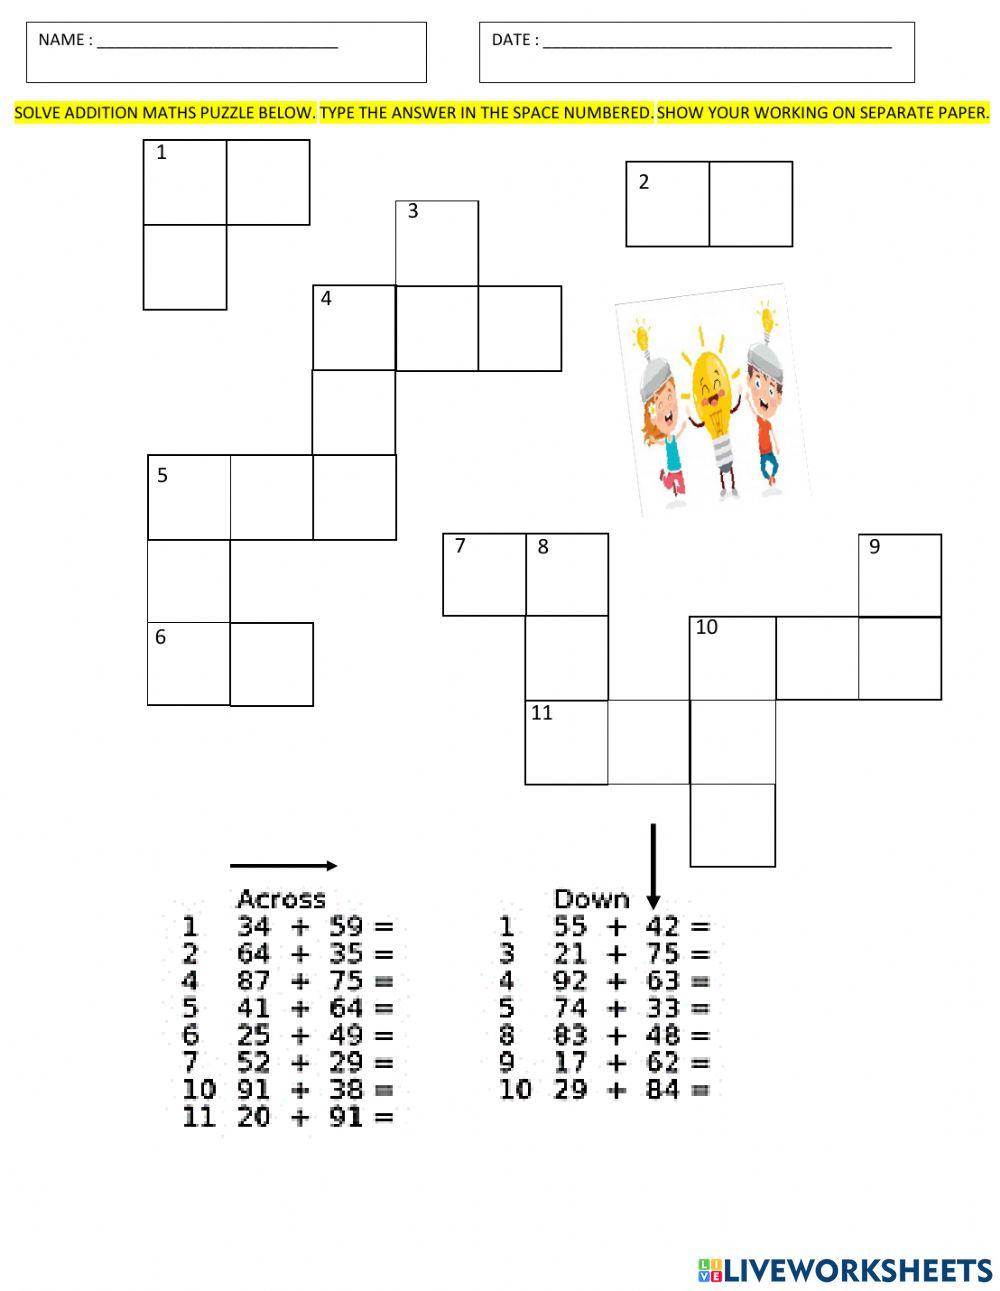 Maths puzzle week 44